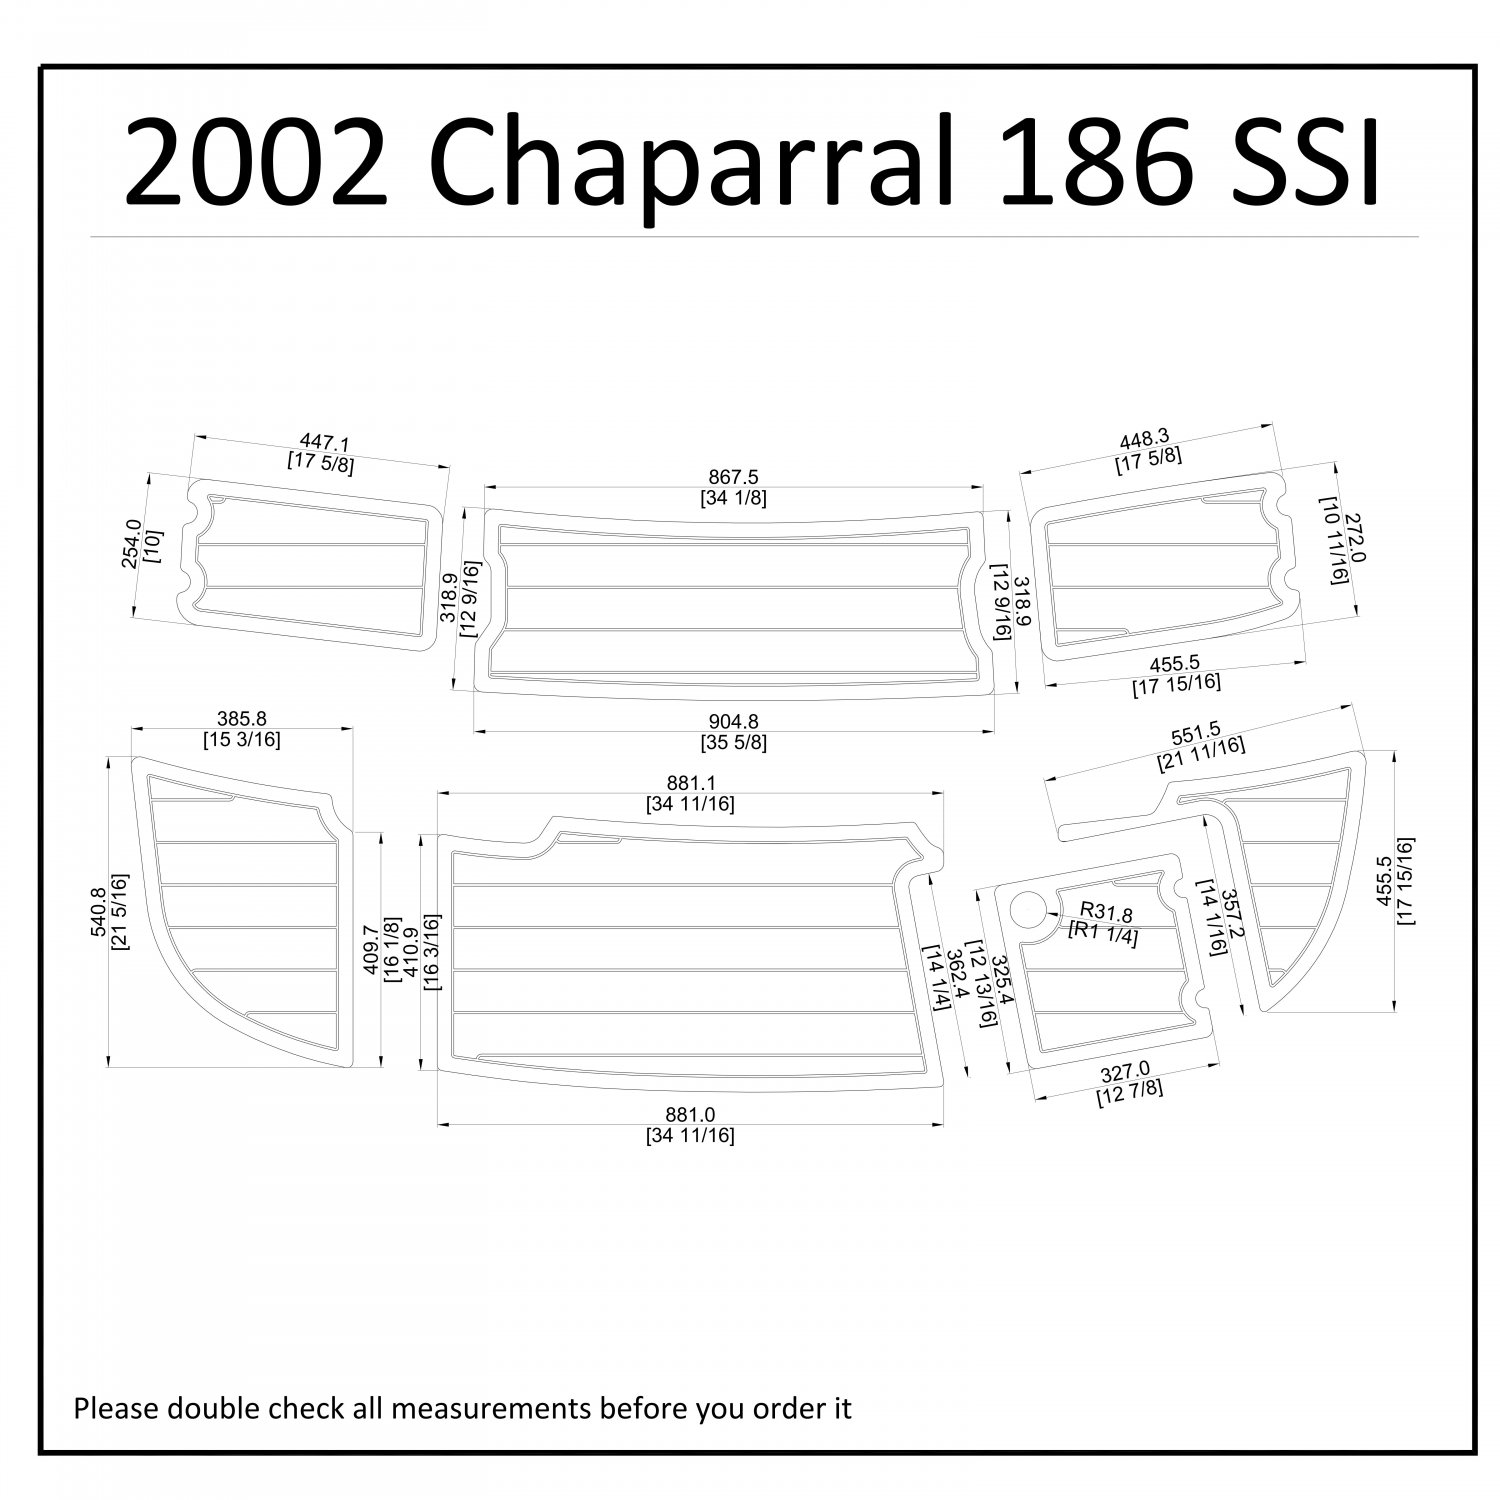 2002 Chaparral 186 SSI 190SSI Swim Platform Boat EVA Faux Teak Deck Floor Pad